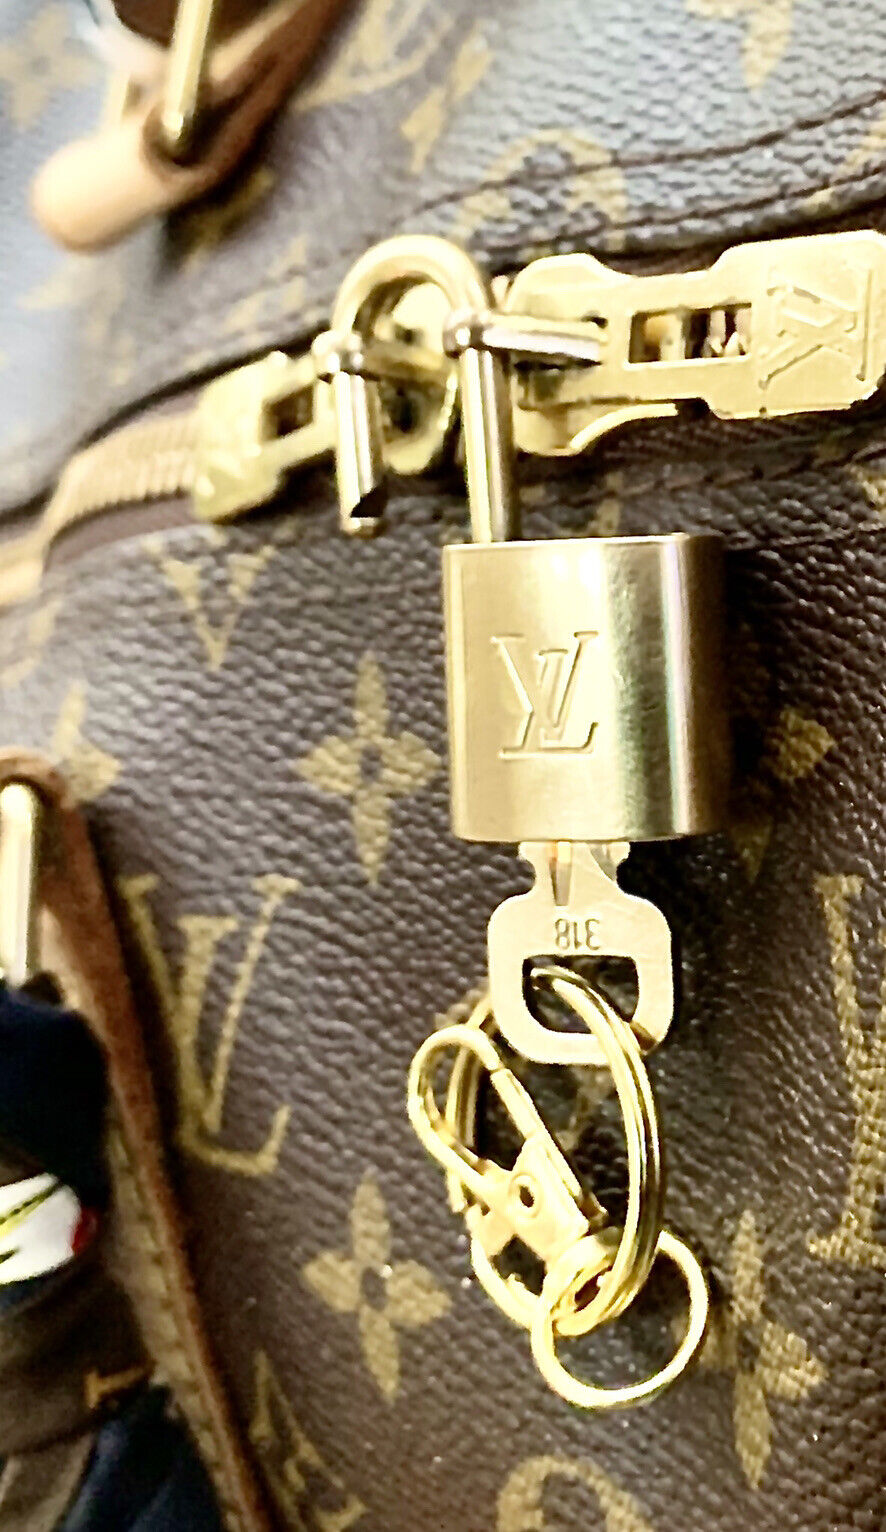 Louis Vuitton Lock w/ Key 300-320 Brass Goldtone for 1 Set Authentic -  RESTORED